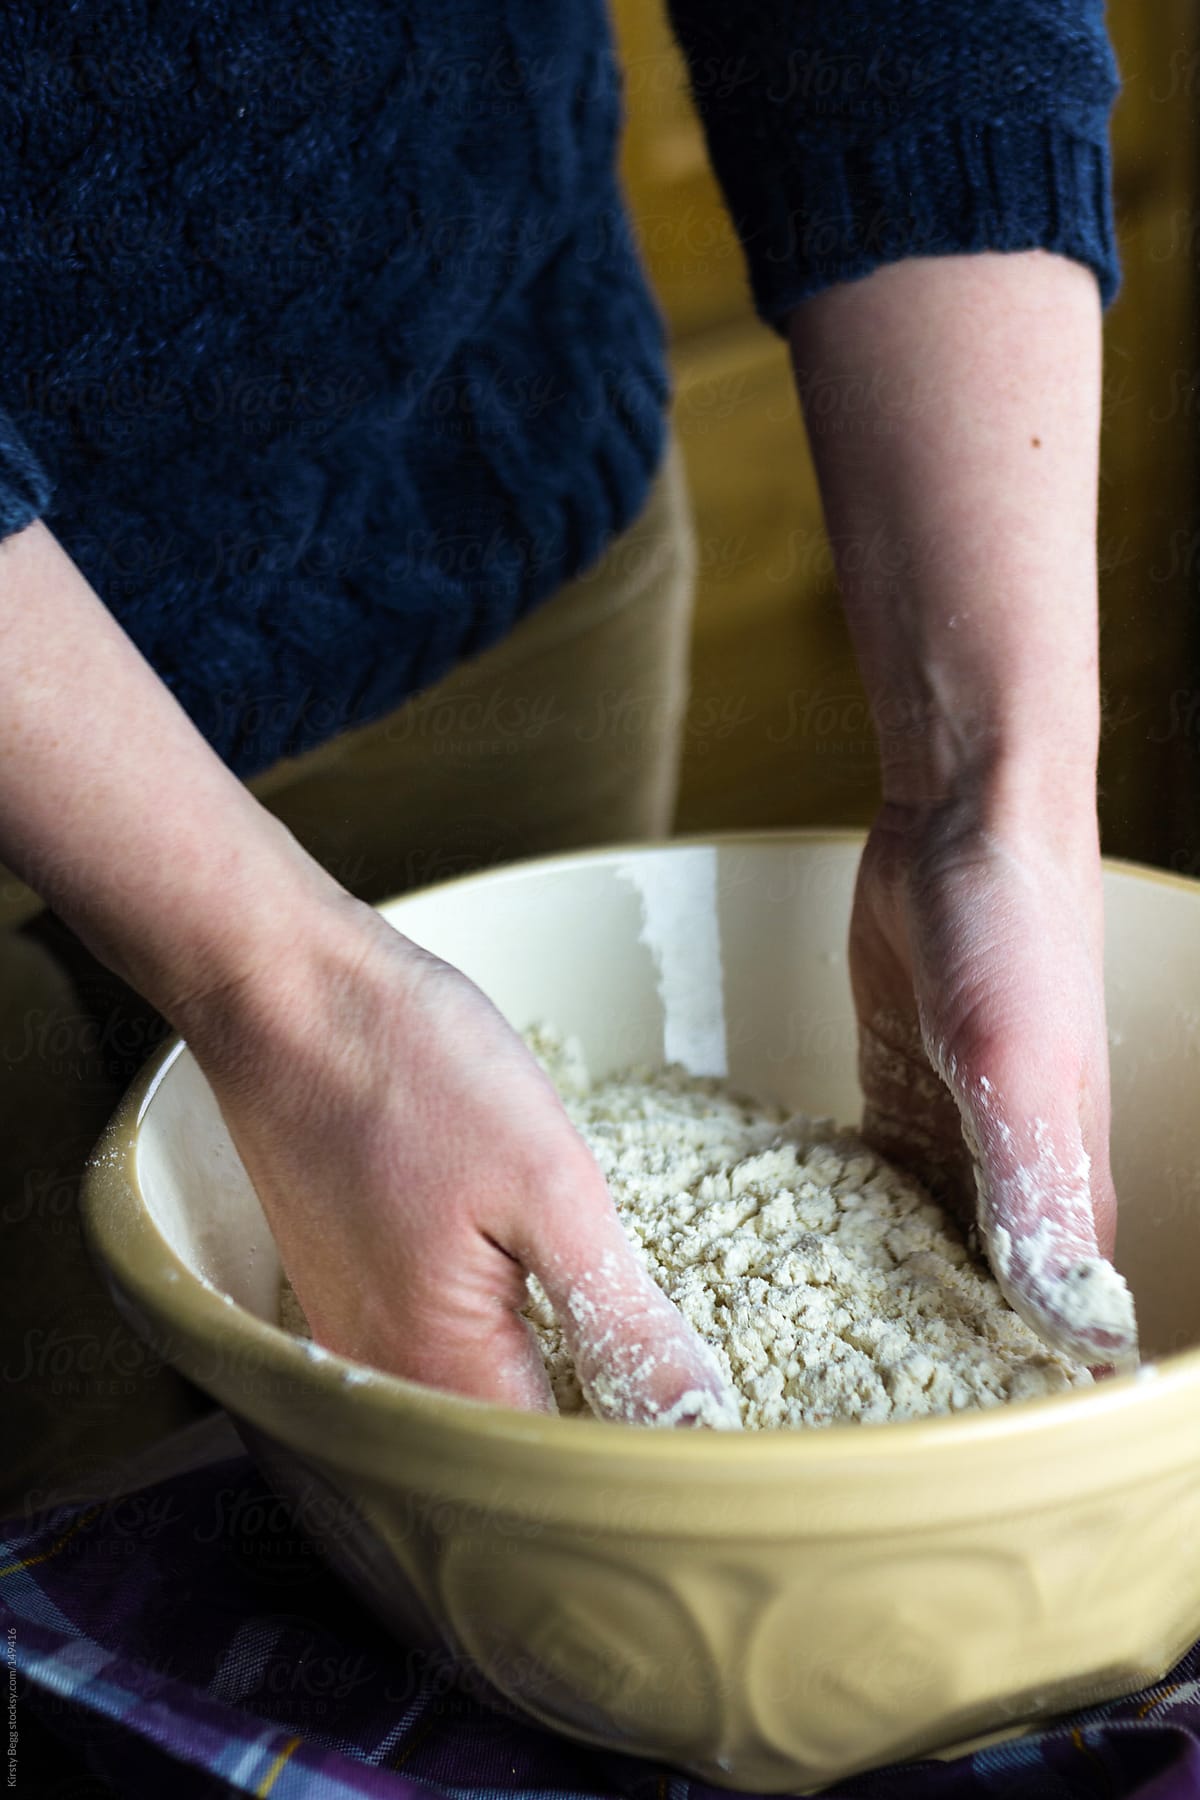 Woman mixing flour to make bread